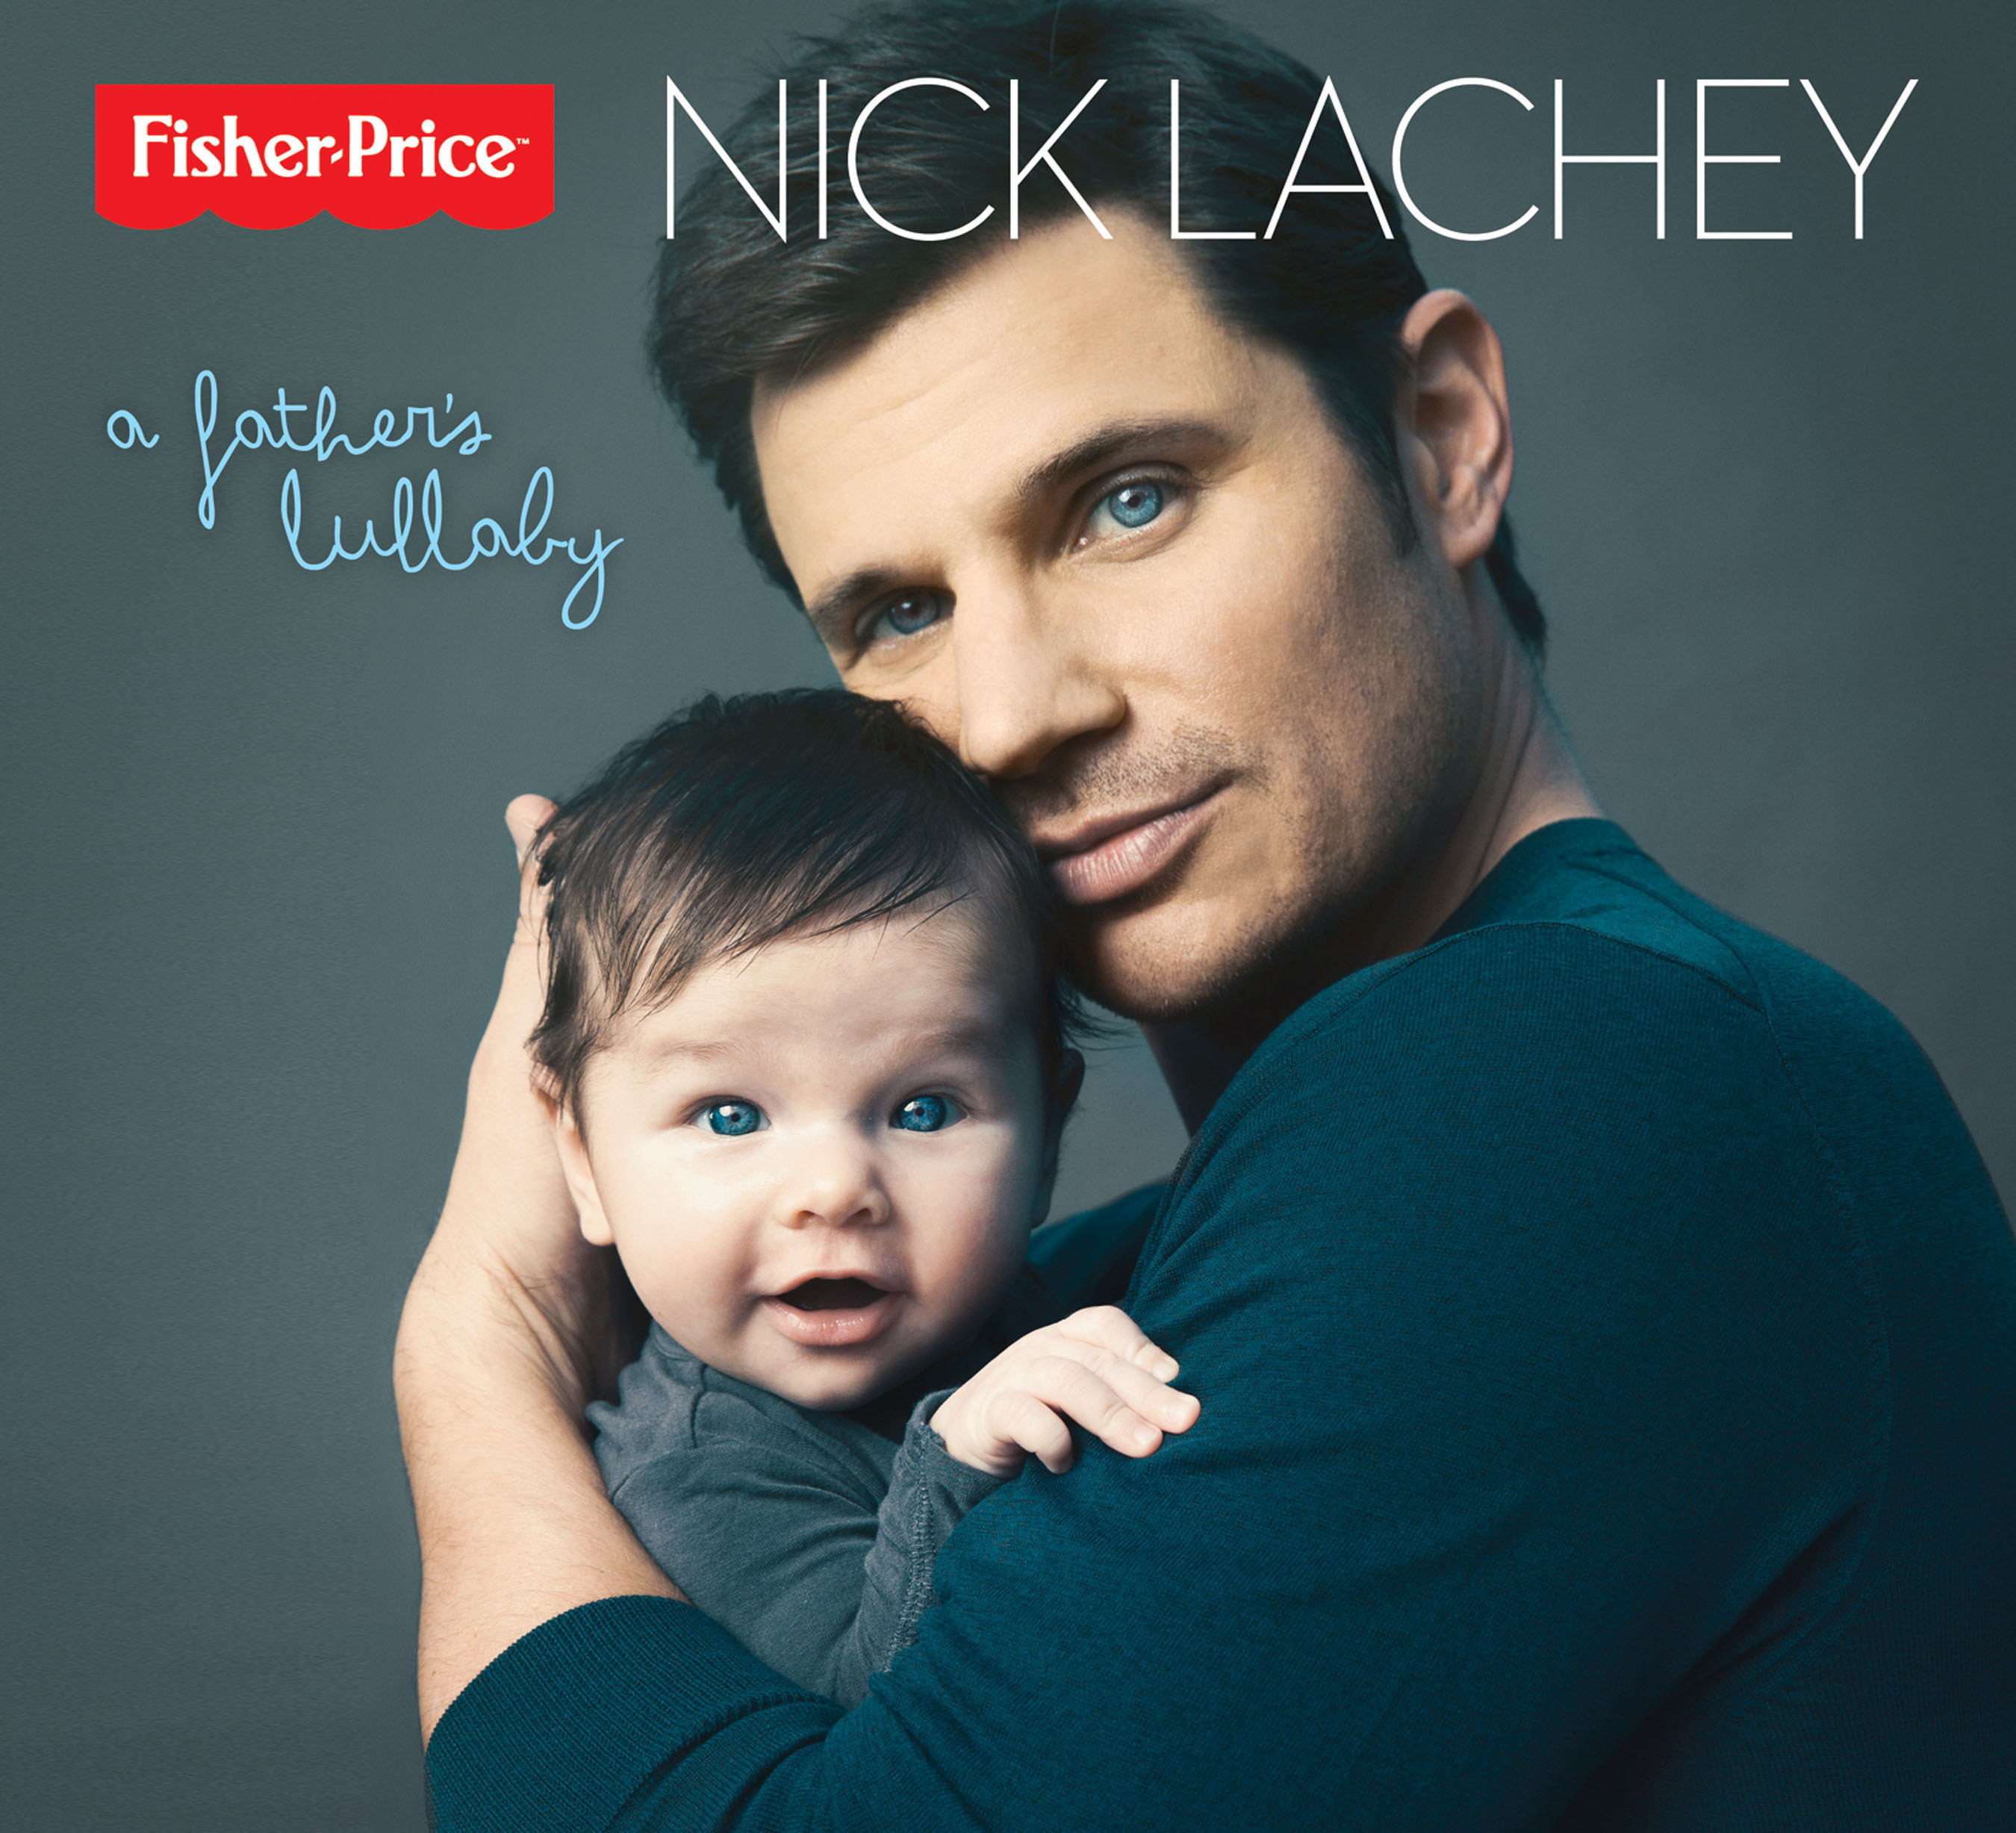 Nick dad. Nick Lachey. Nick Baby. A fathers choice.